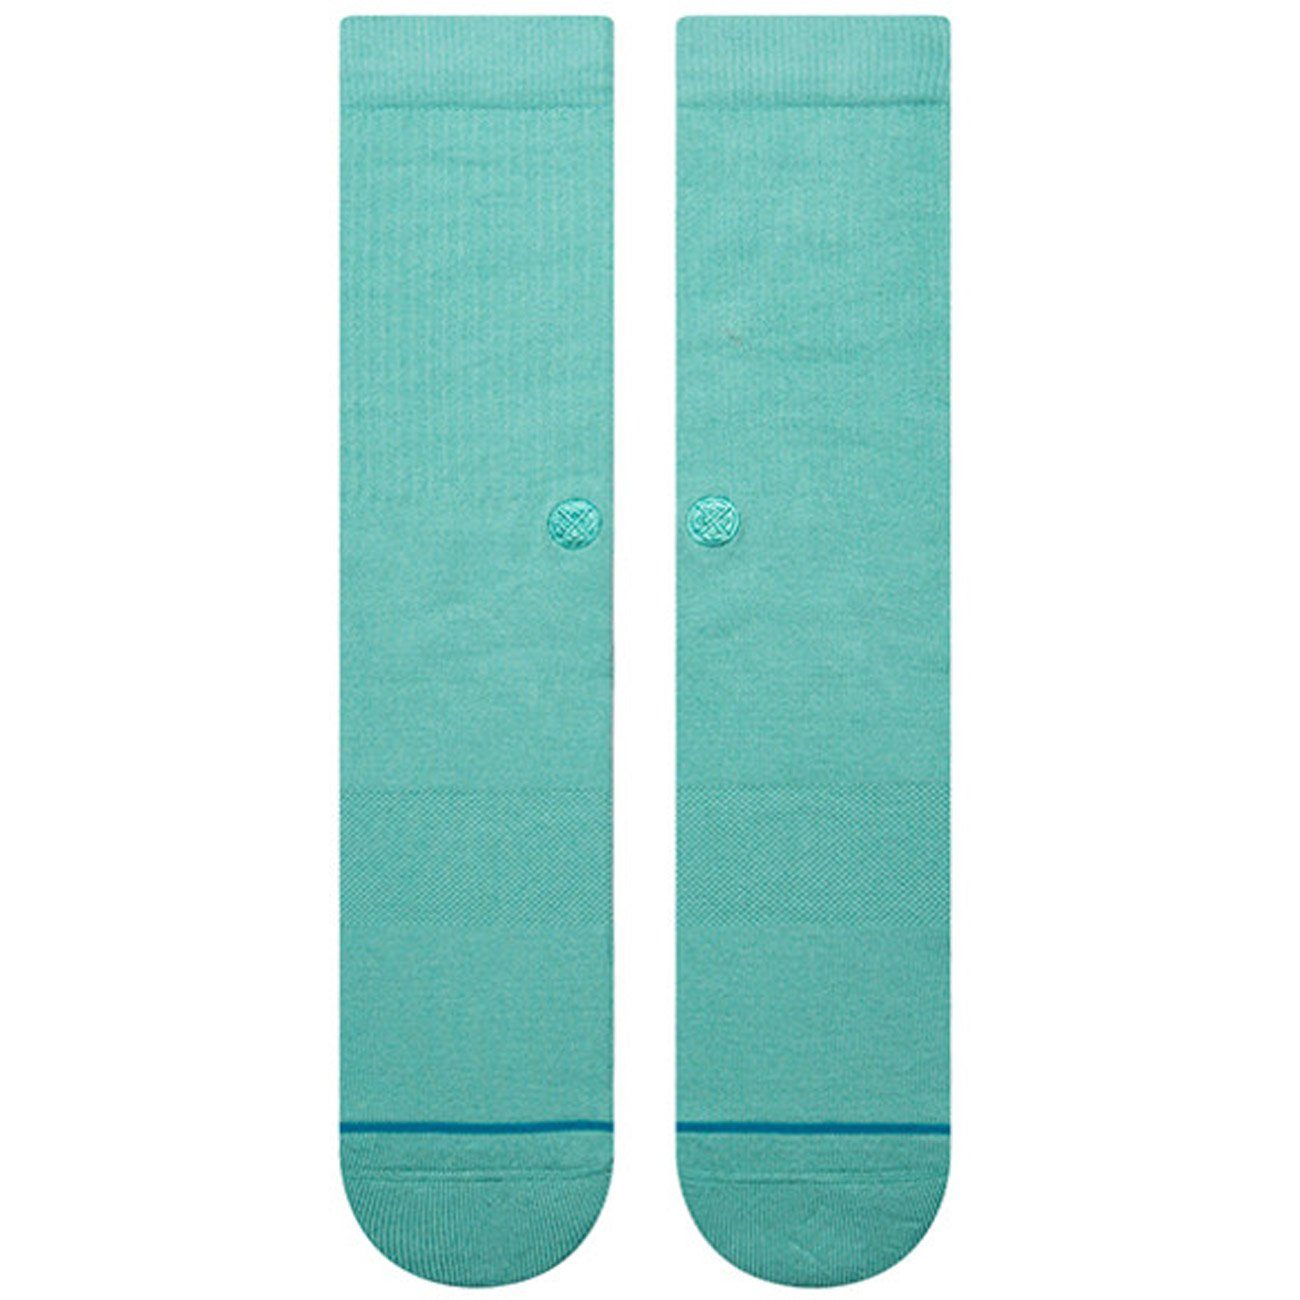 Socken ICON Stance turquoise